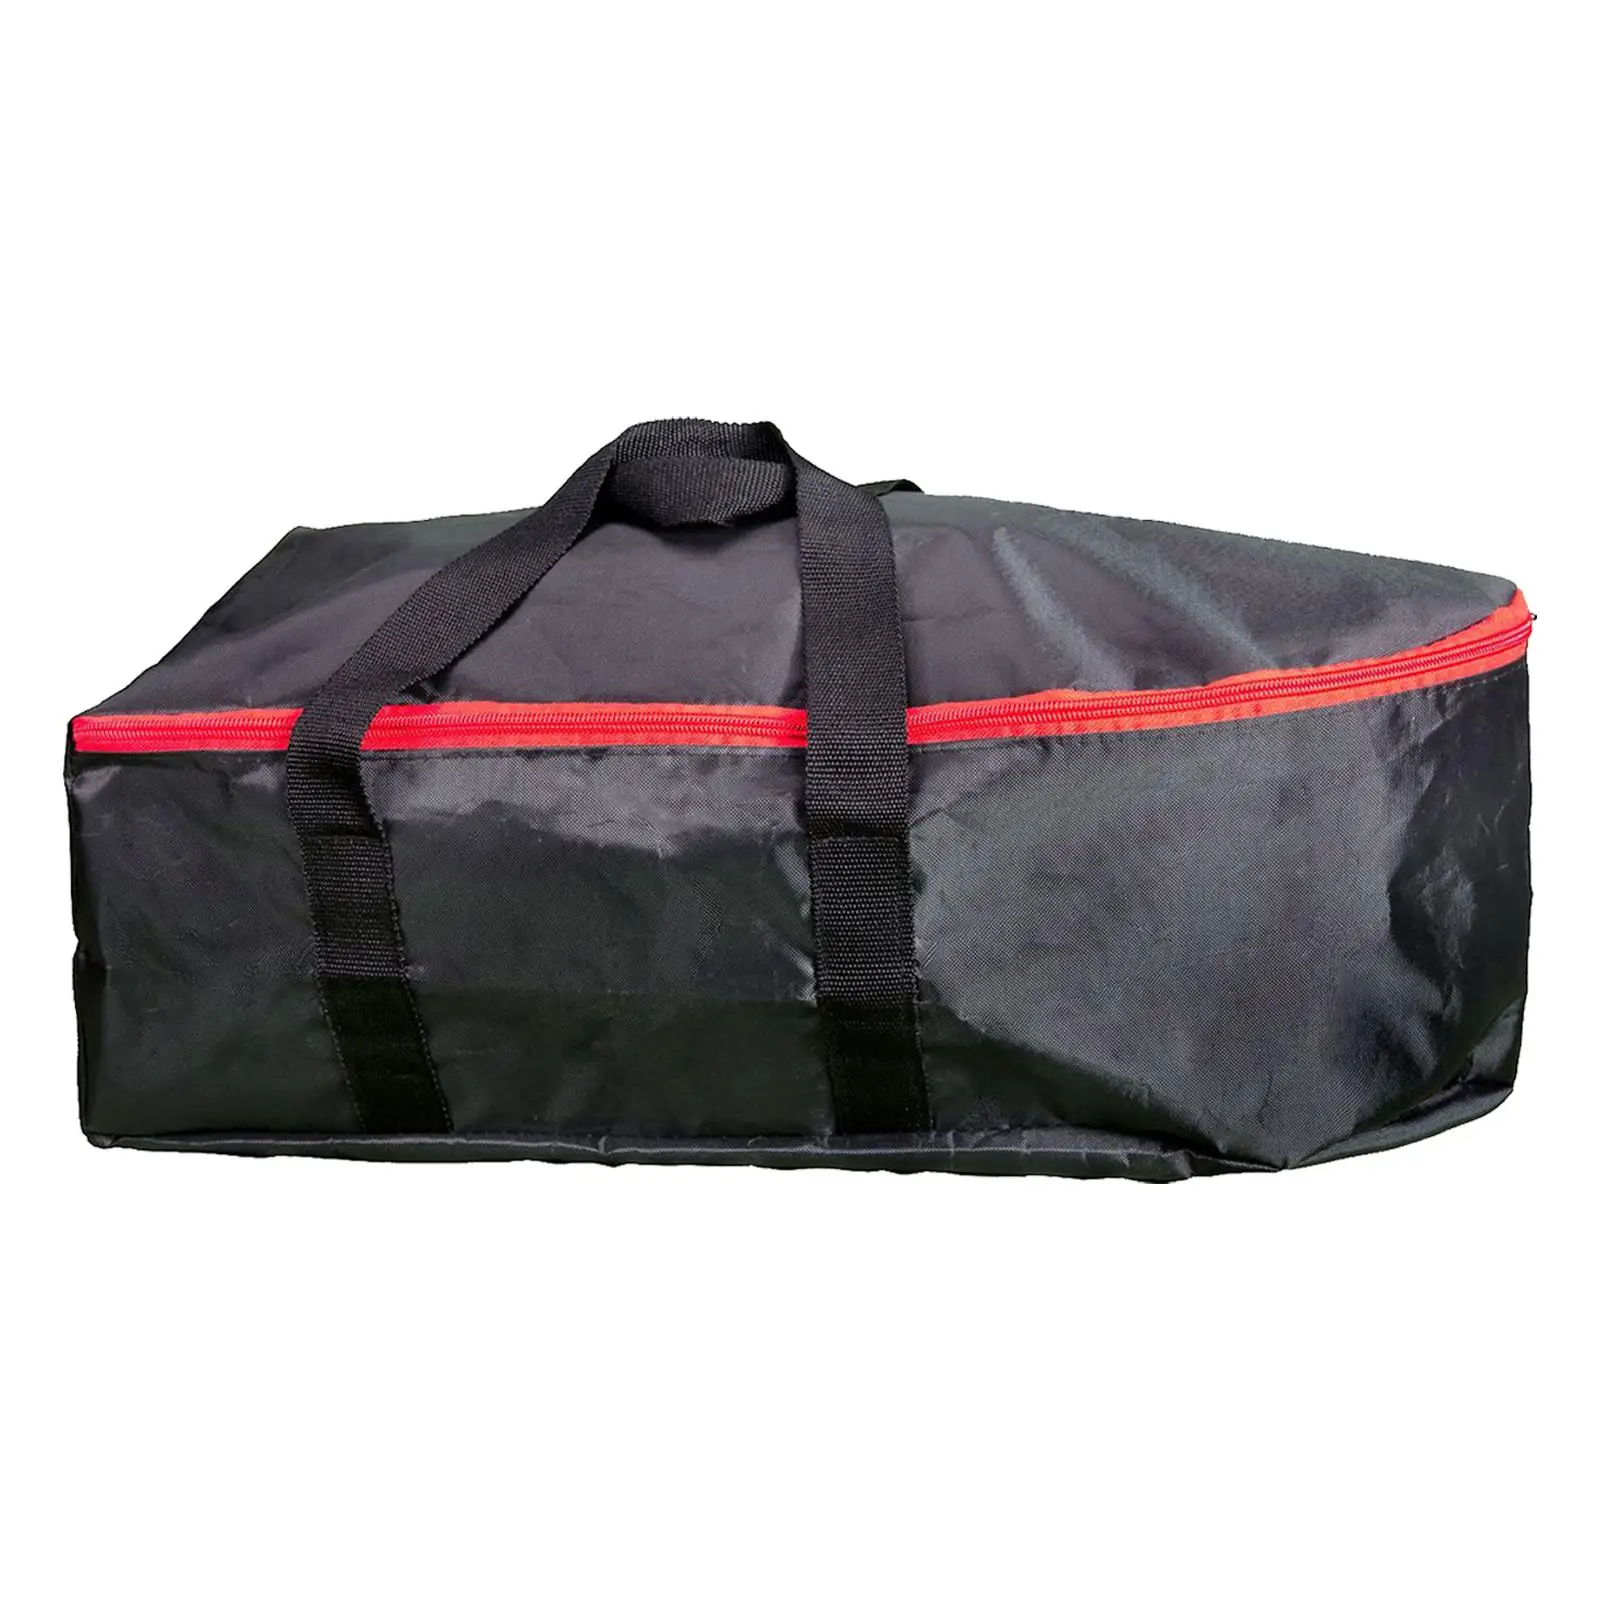 Waterproof Fishing Tackle Bag, Bait Boat Storage, Protective